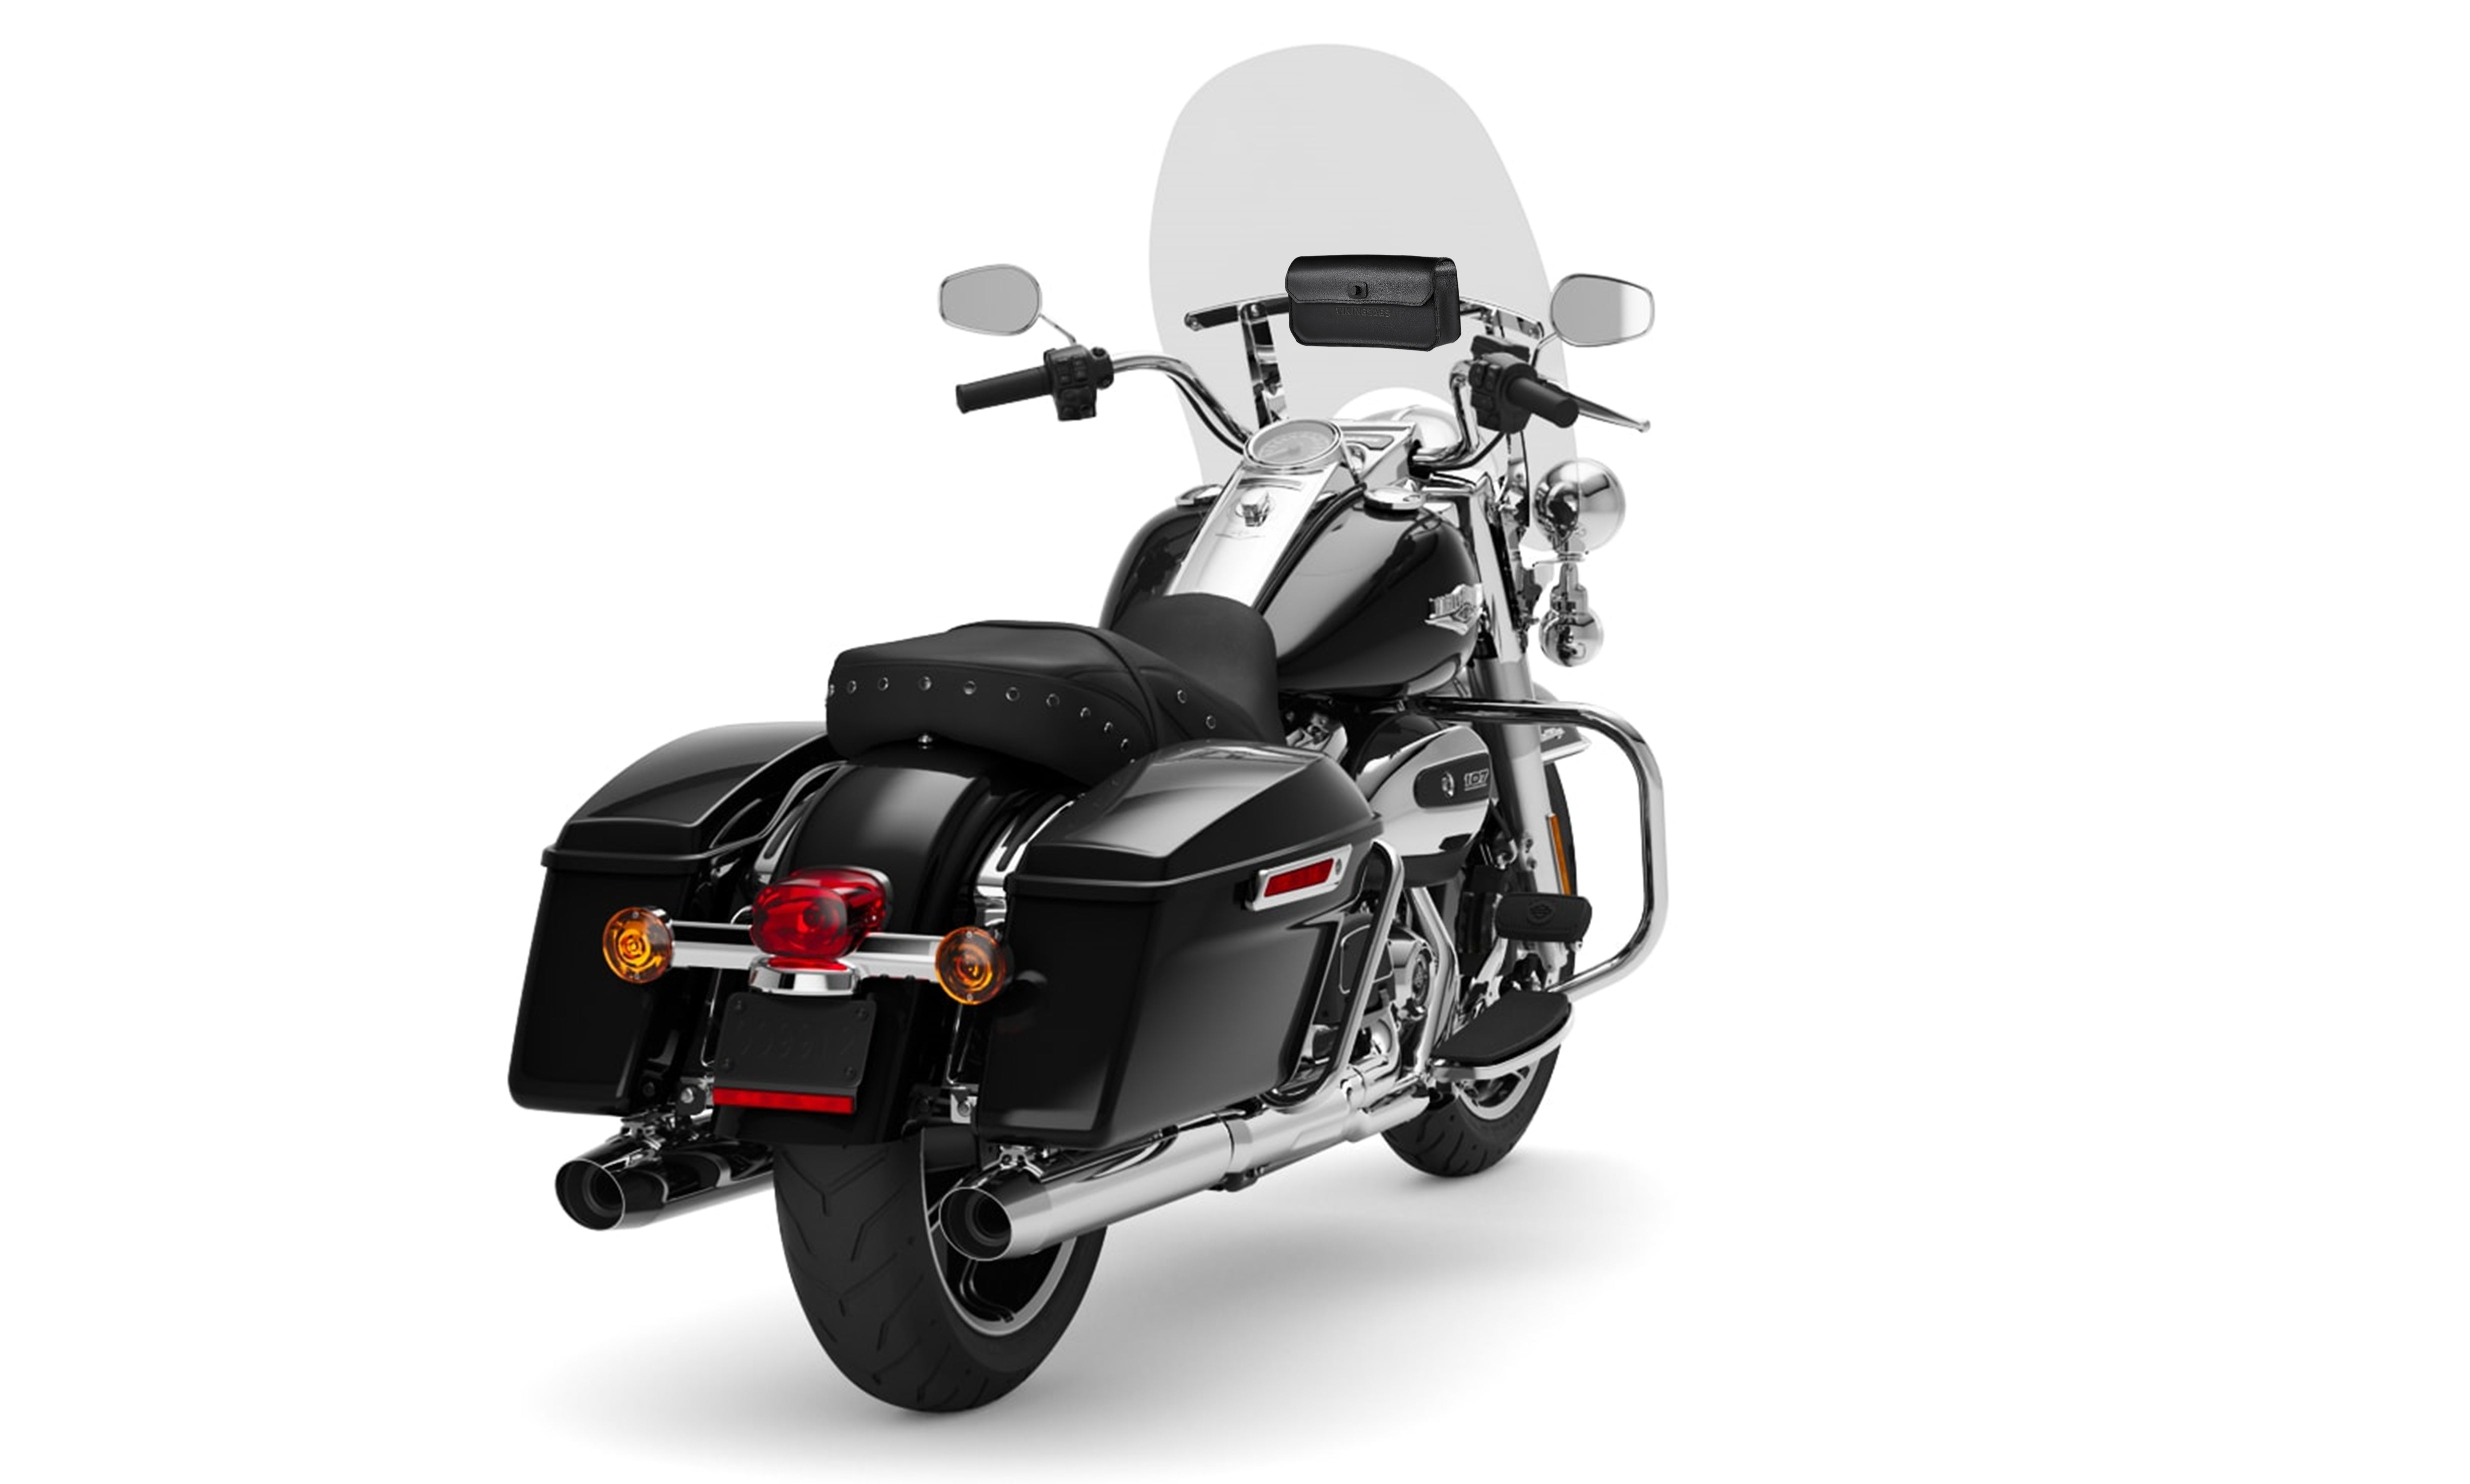 Viking Premium Universal Motorcycle Windshield Bag on Bike @expand